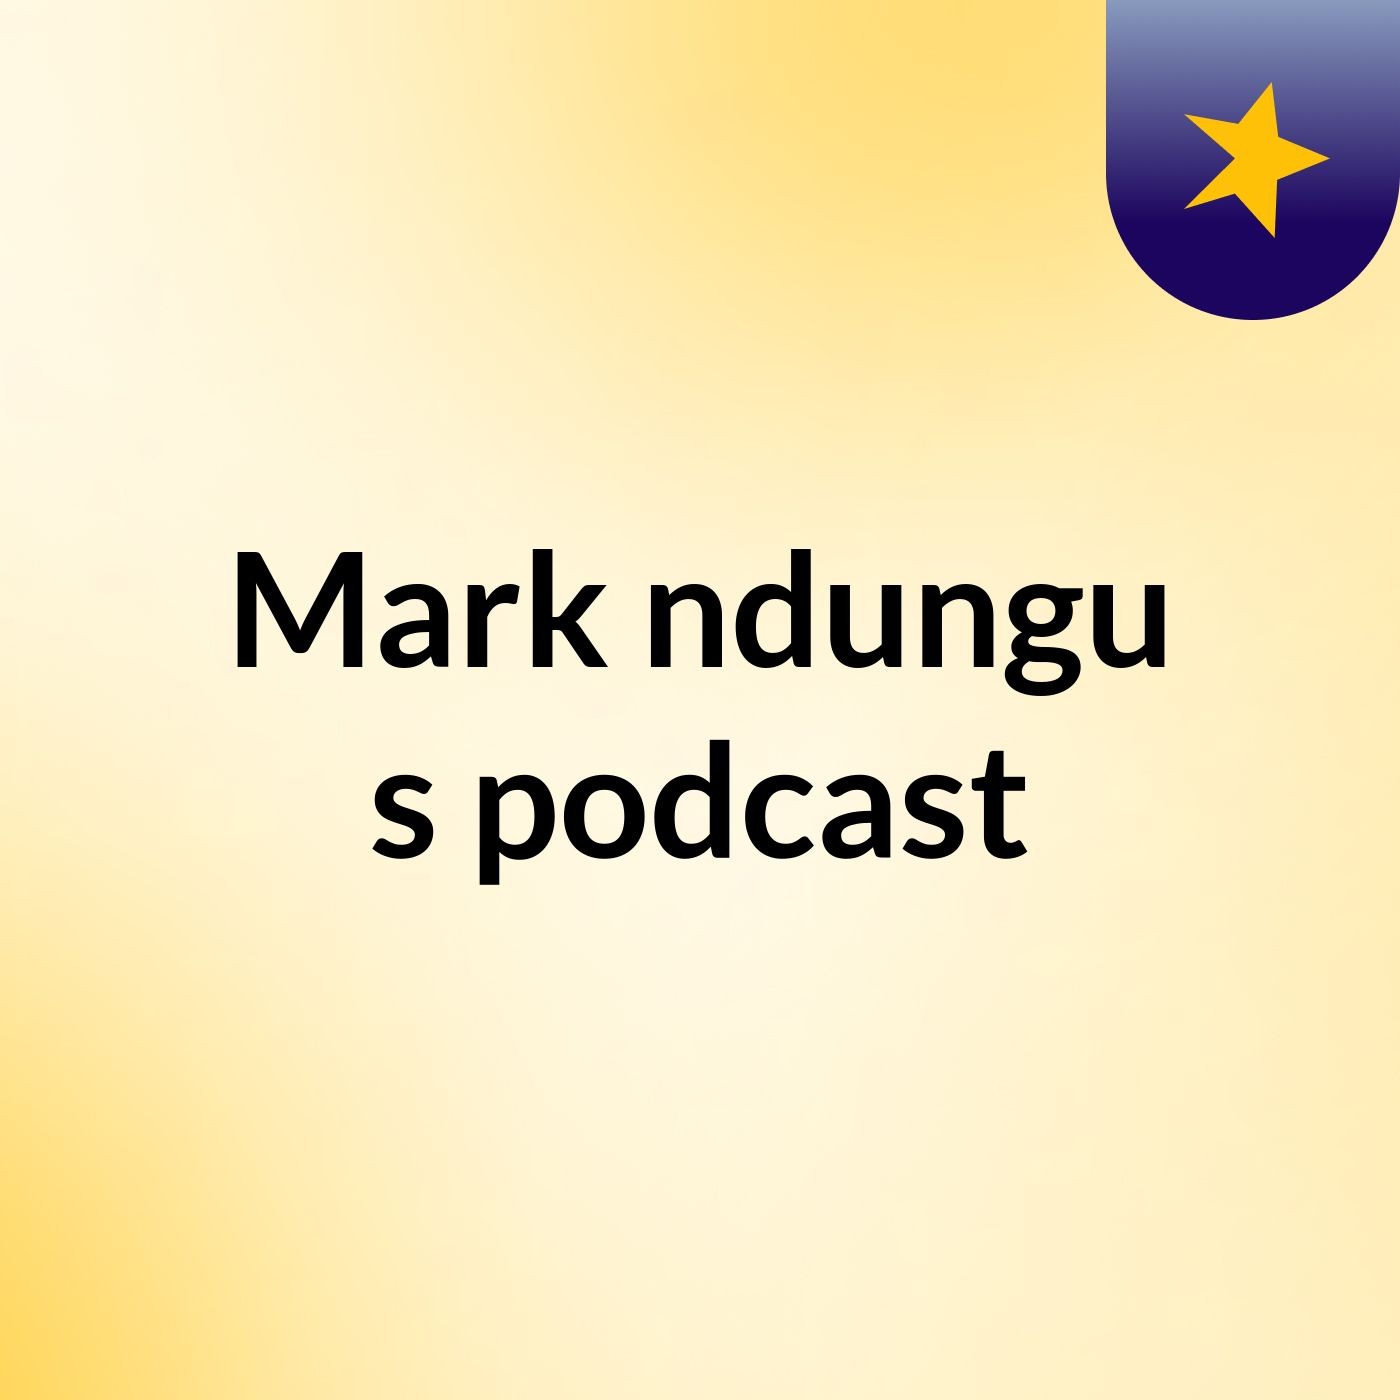 Episode 10 - Mark ndungu's podcast